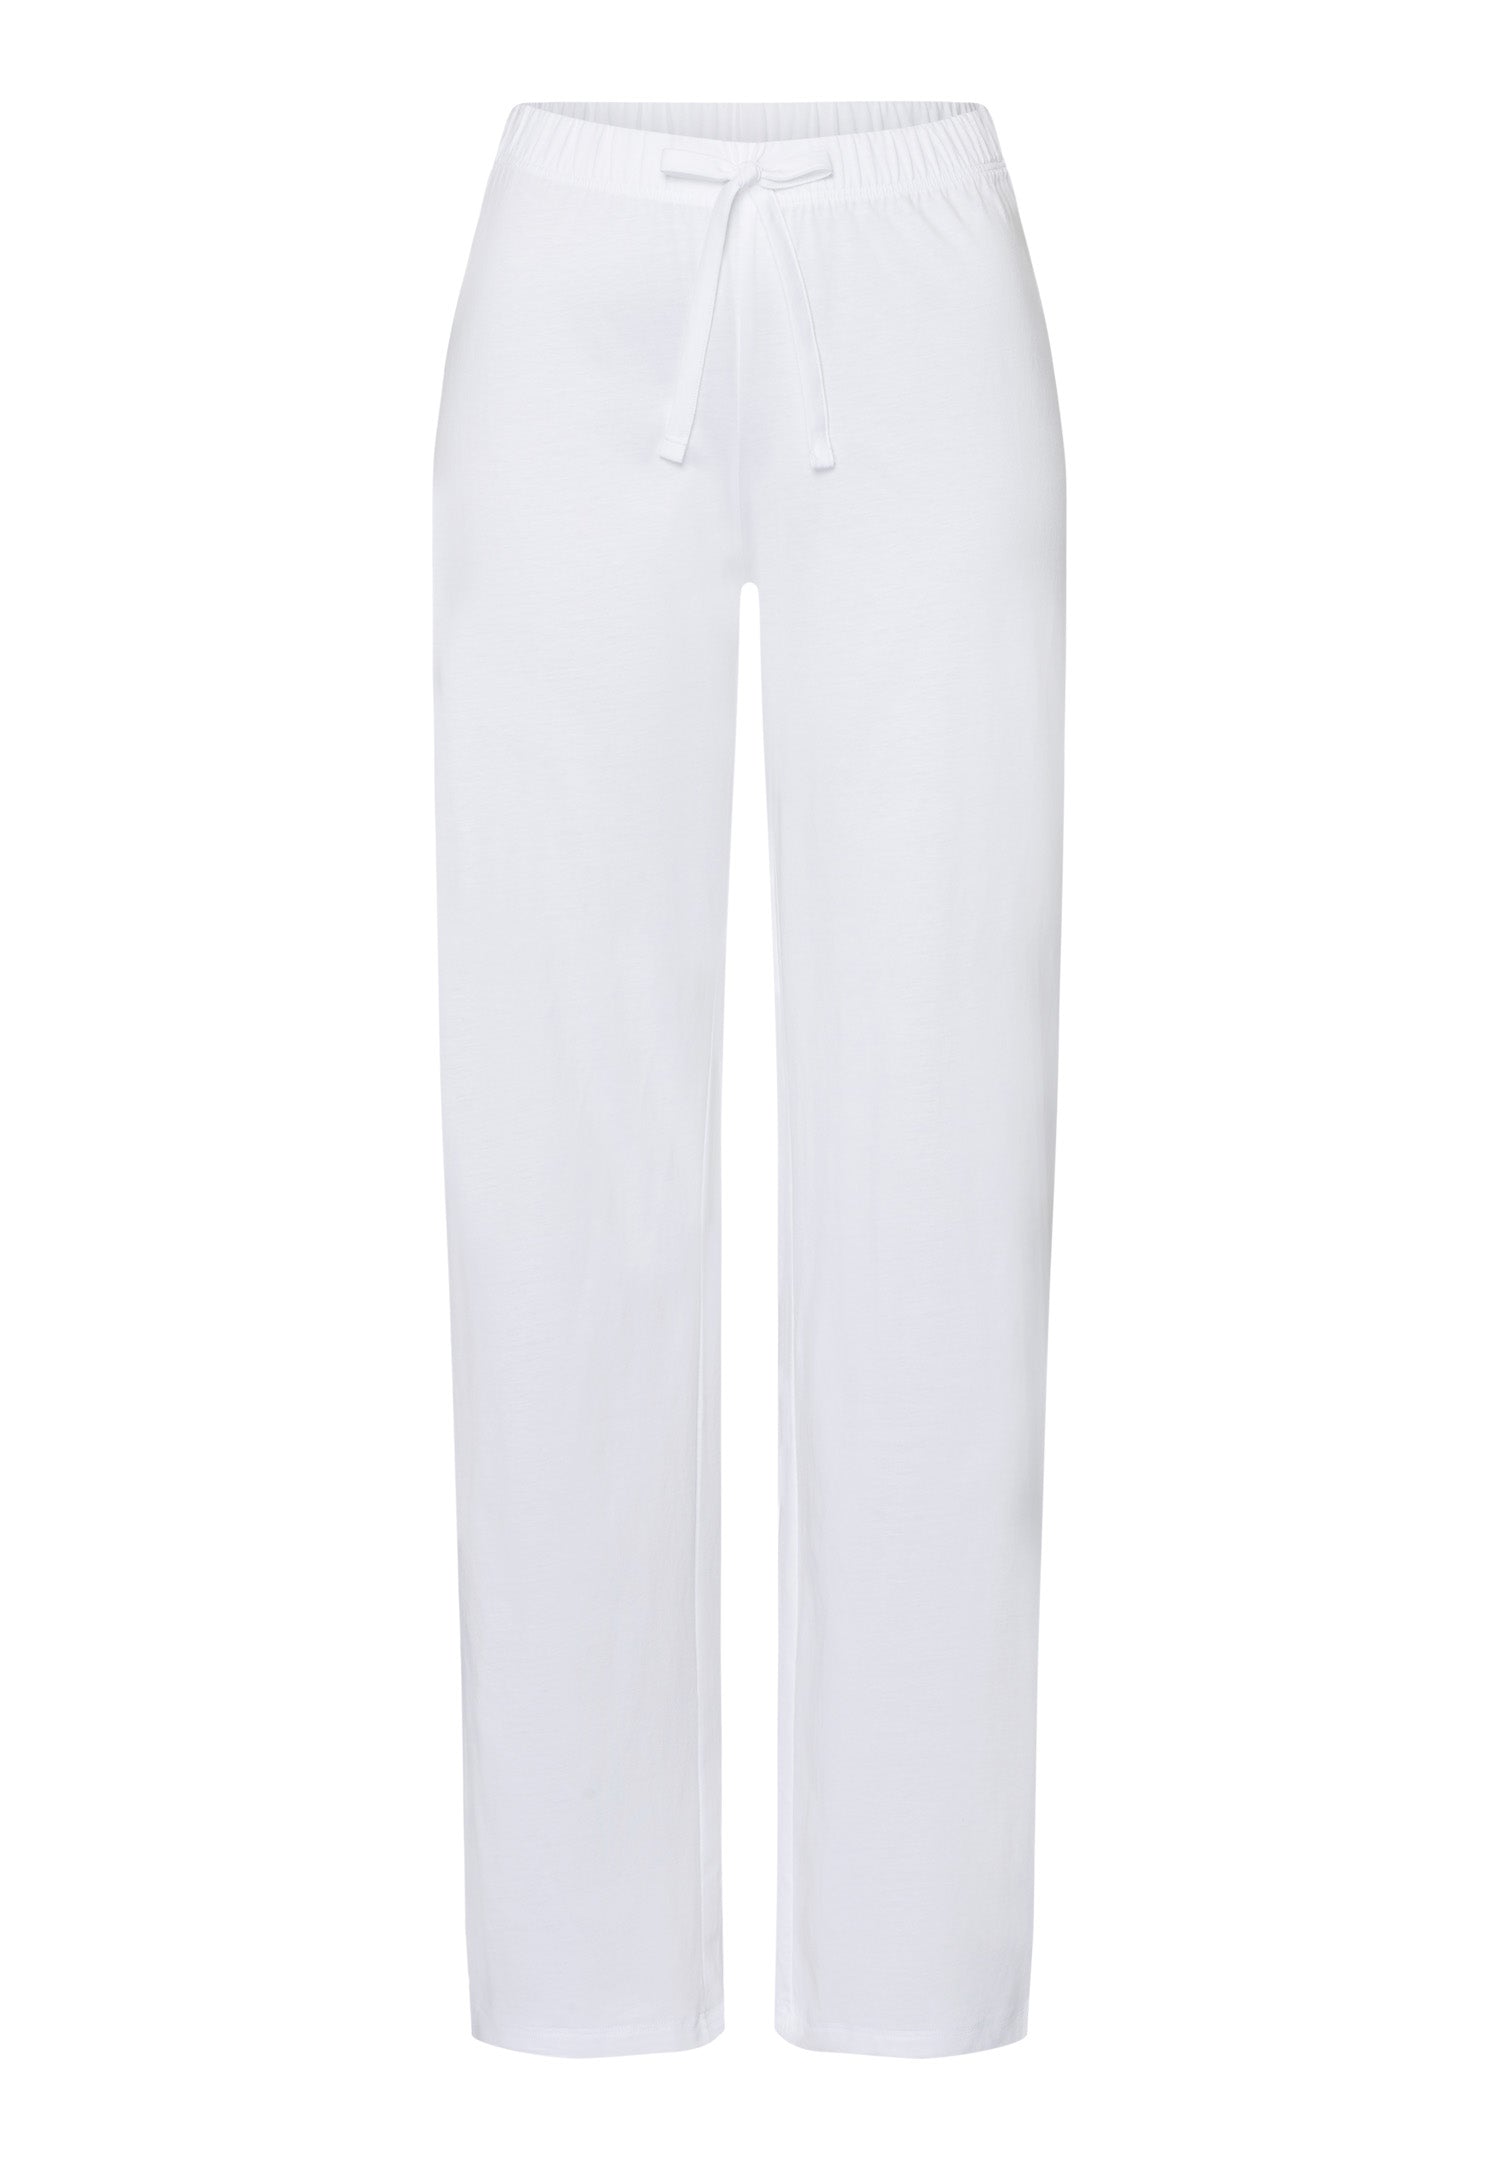 78805 Natural Wear PANTS - 101 White